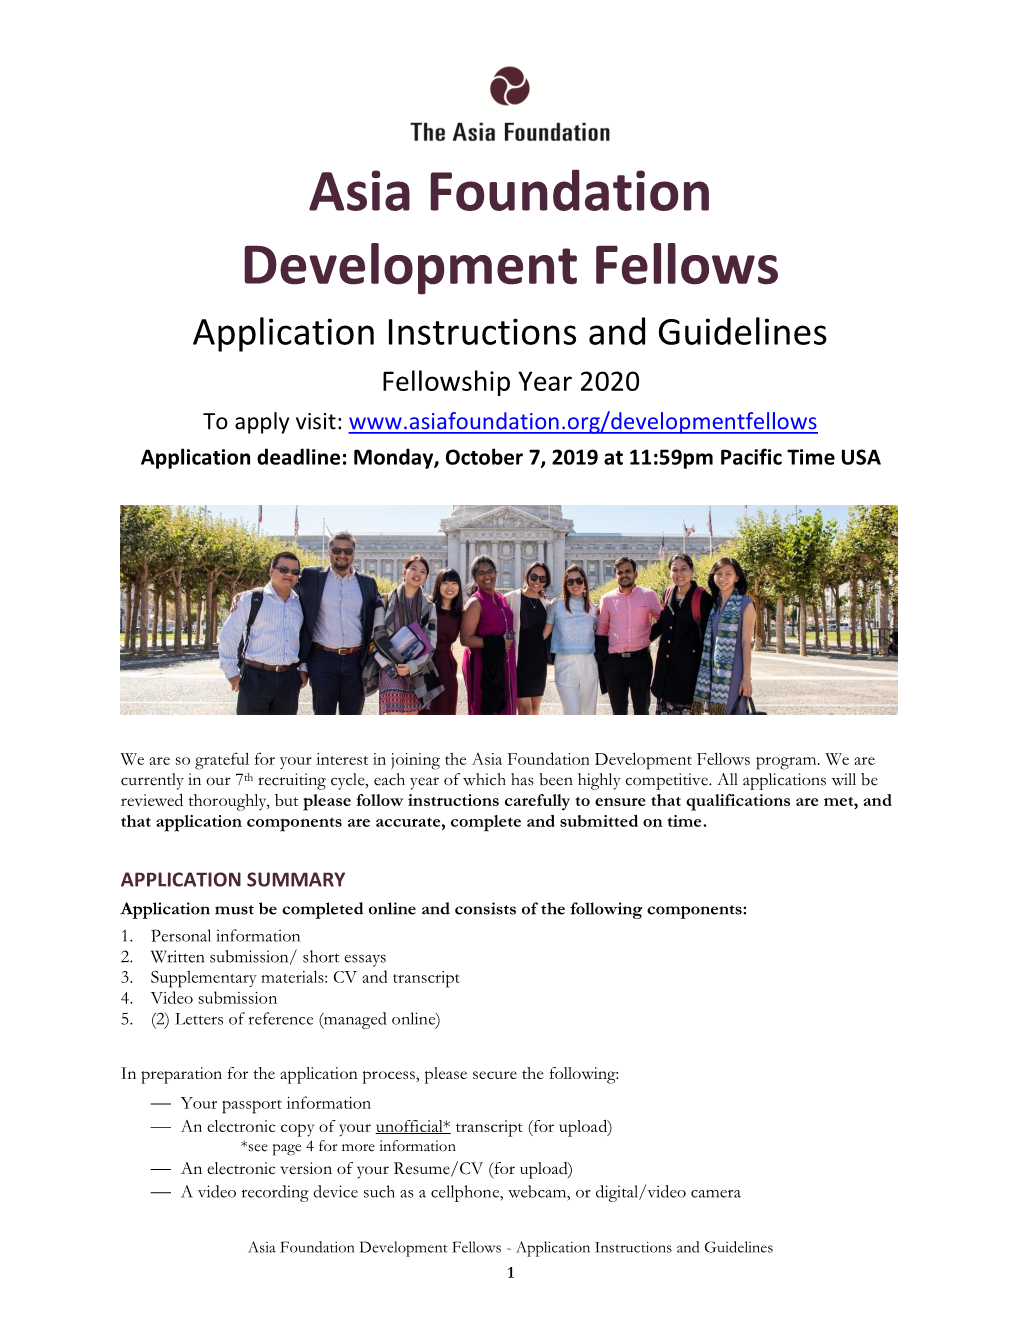 Asia Foundation Development Fellows